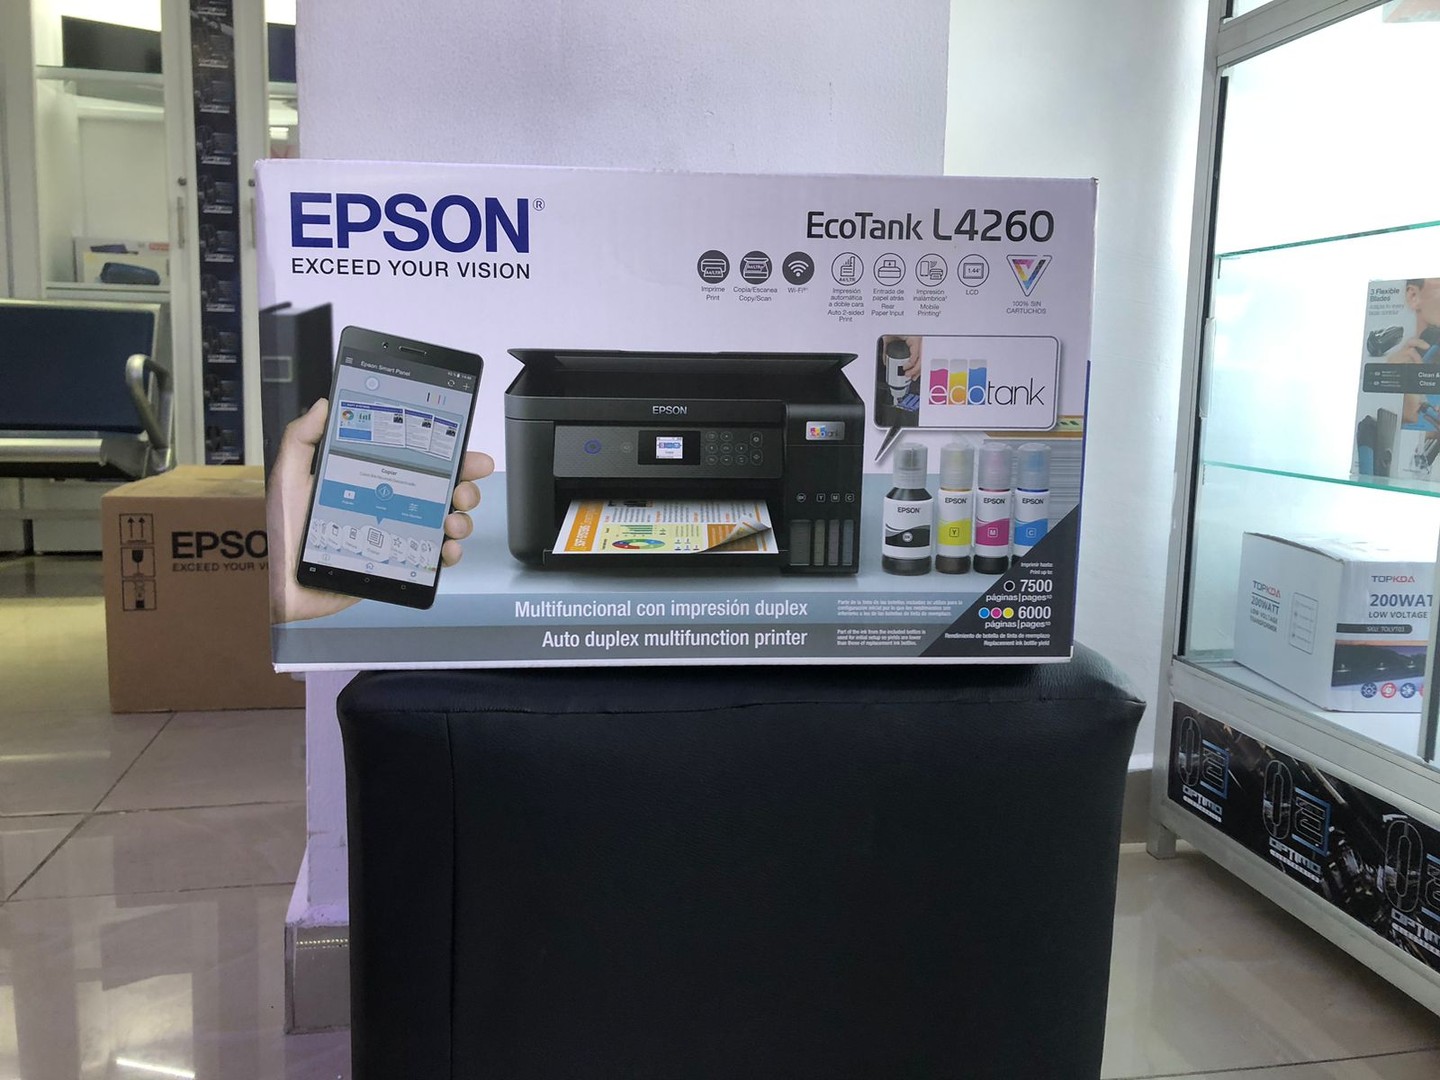 impresoras y scanners - Impresora Epson L4260 Multifuncion, Wifi y Cable USB - Pantalla LCD 0